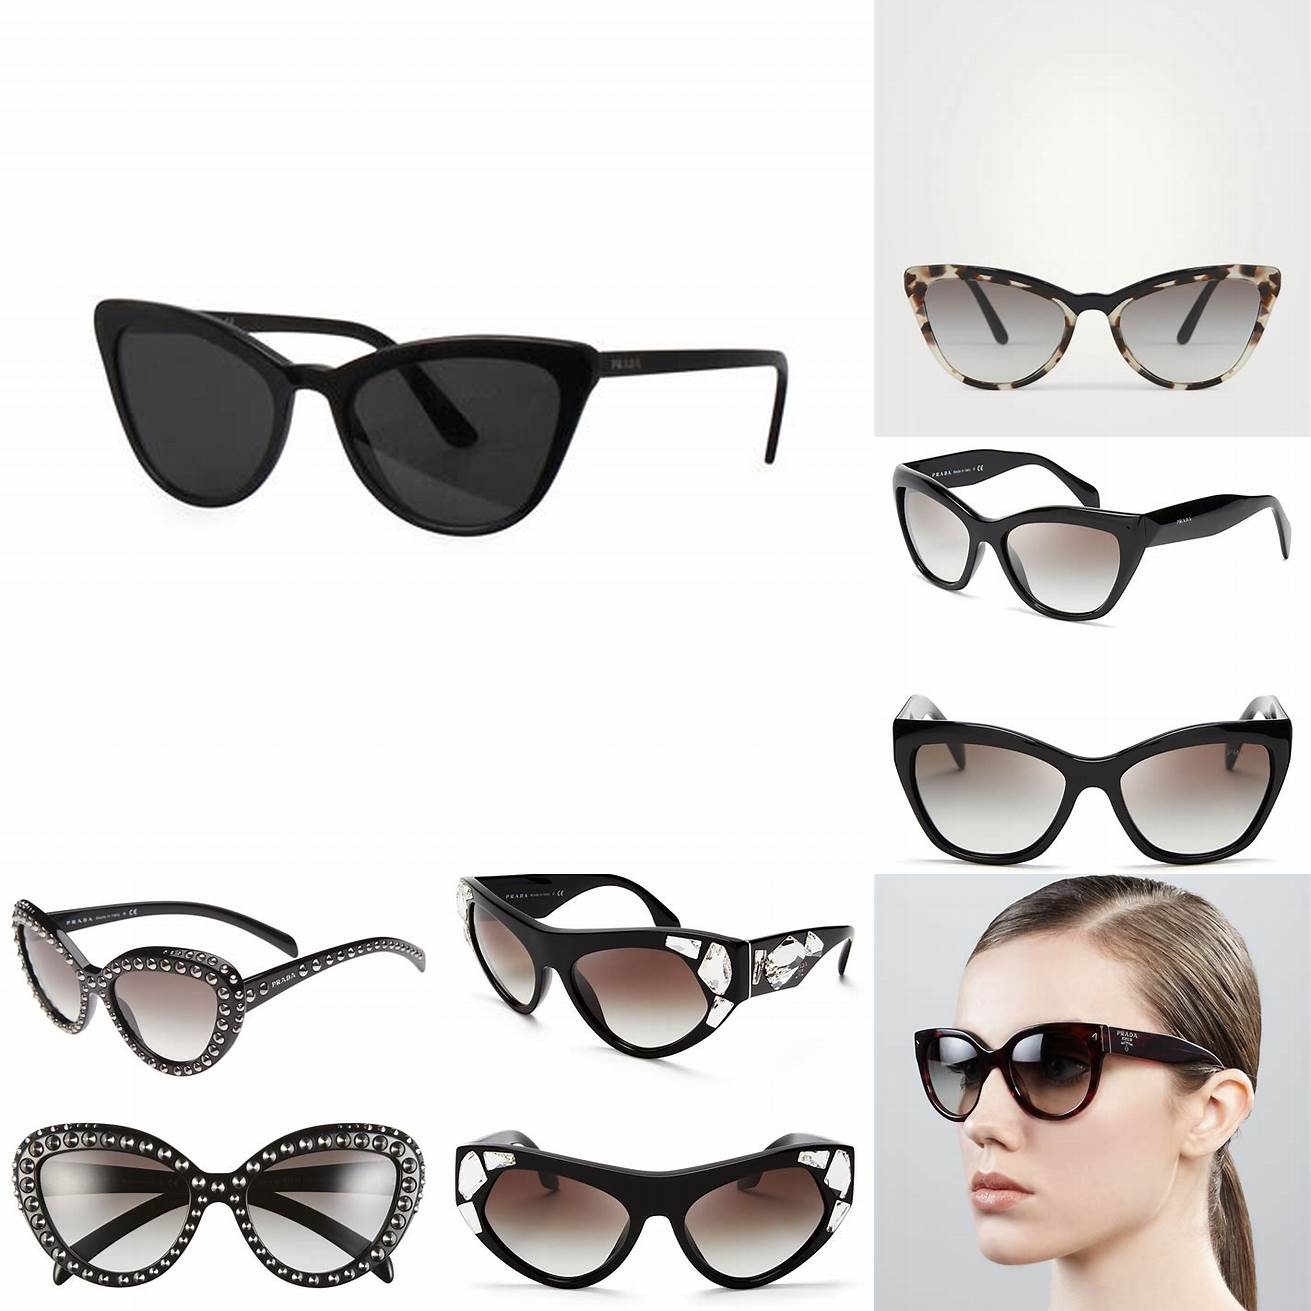 Q Can cat eye Prada sunglasses be worn during the winter